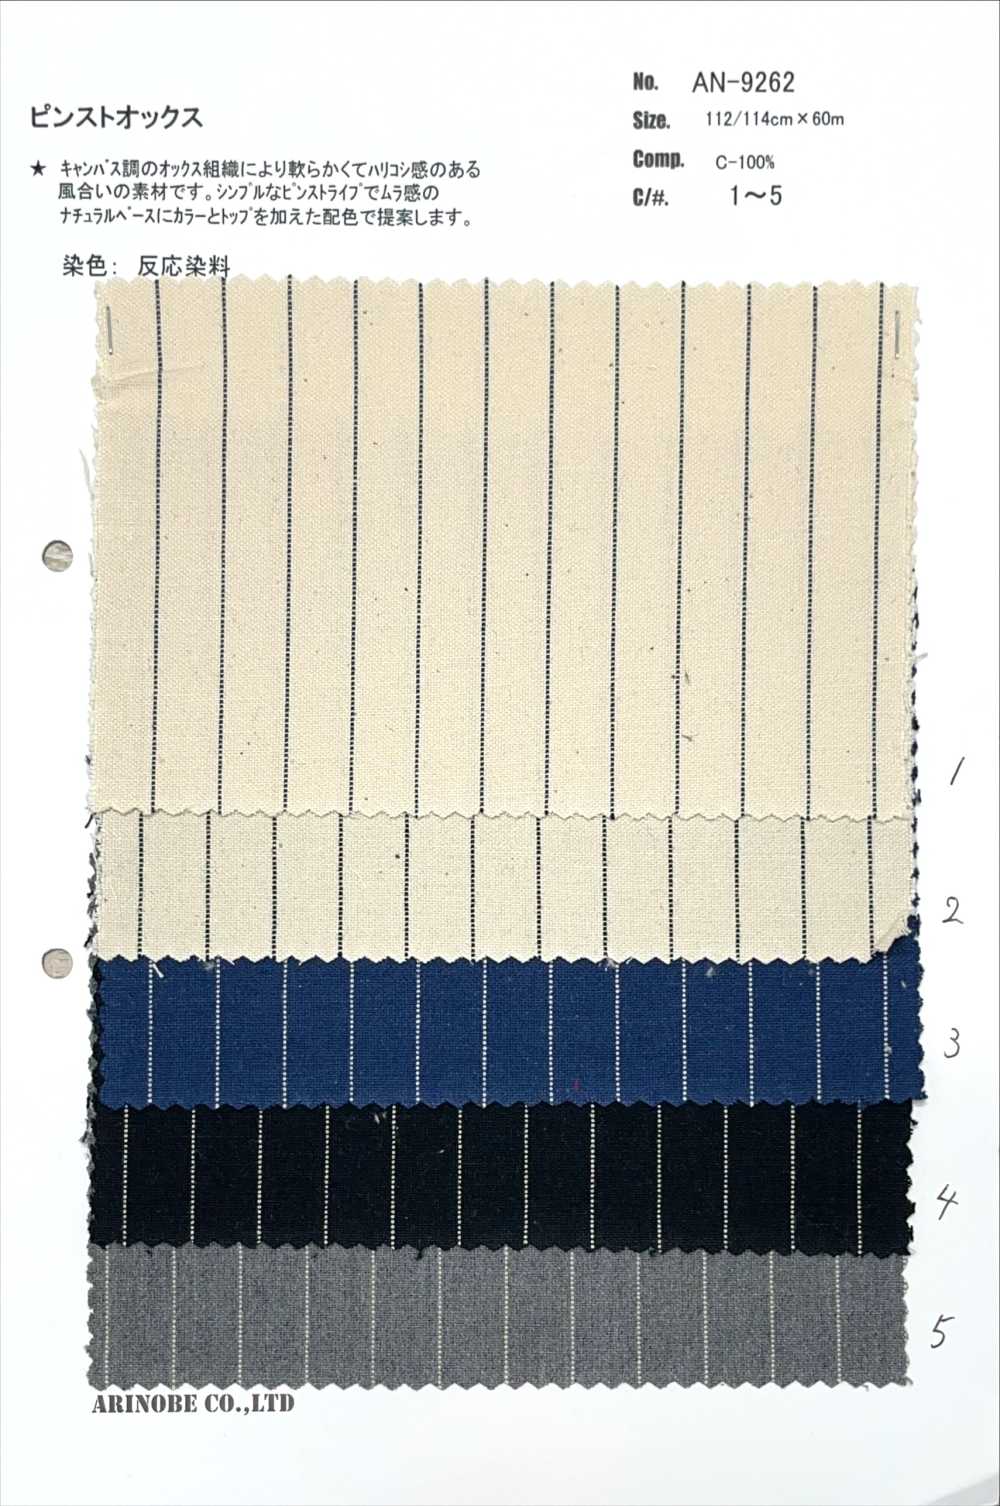 AN-9262 Nadelstreifen-Oxford[Textilgewebe] ARINOBE CO., LTD.